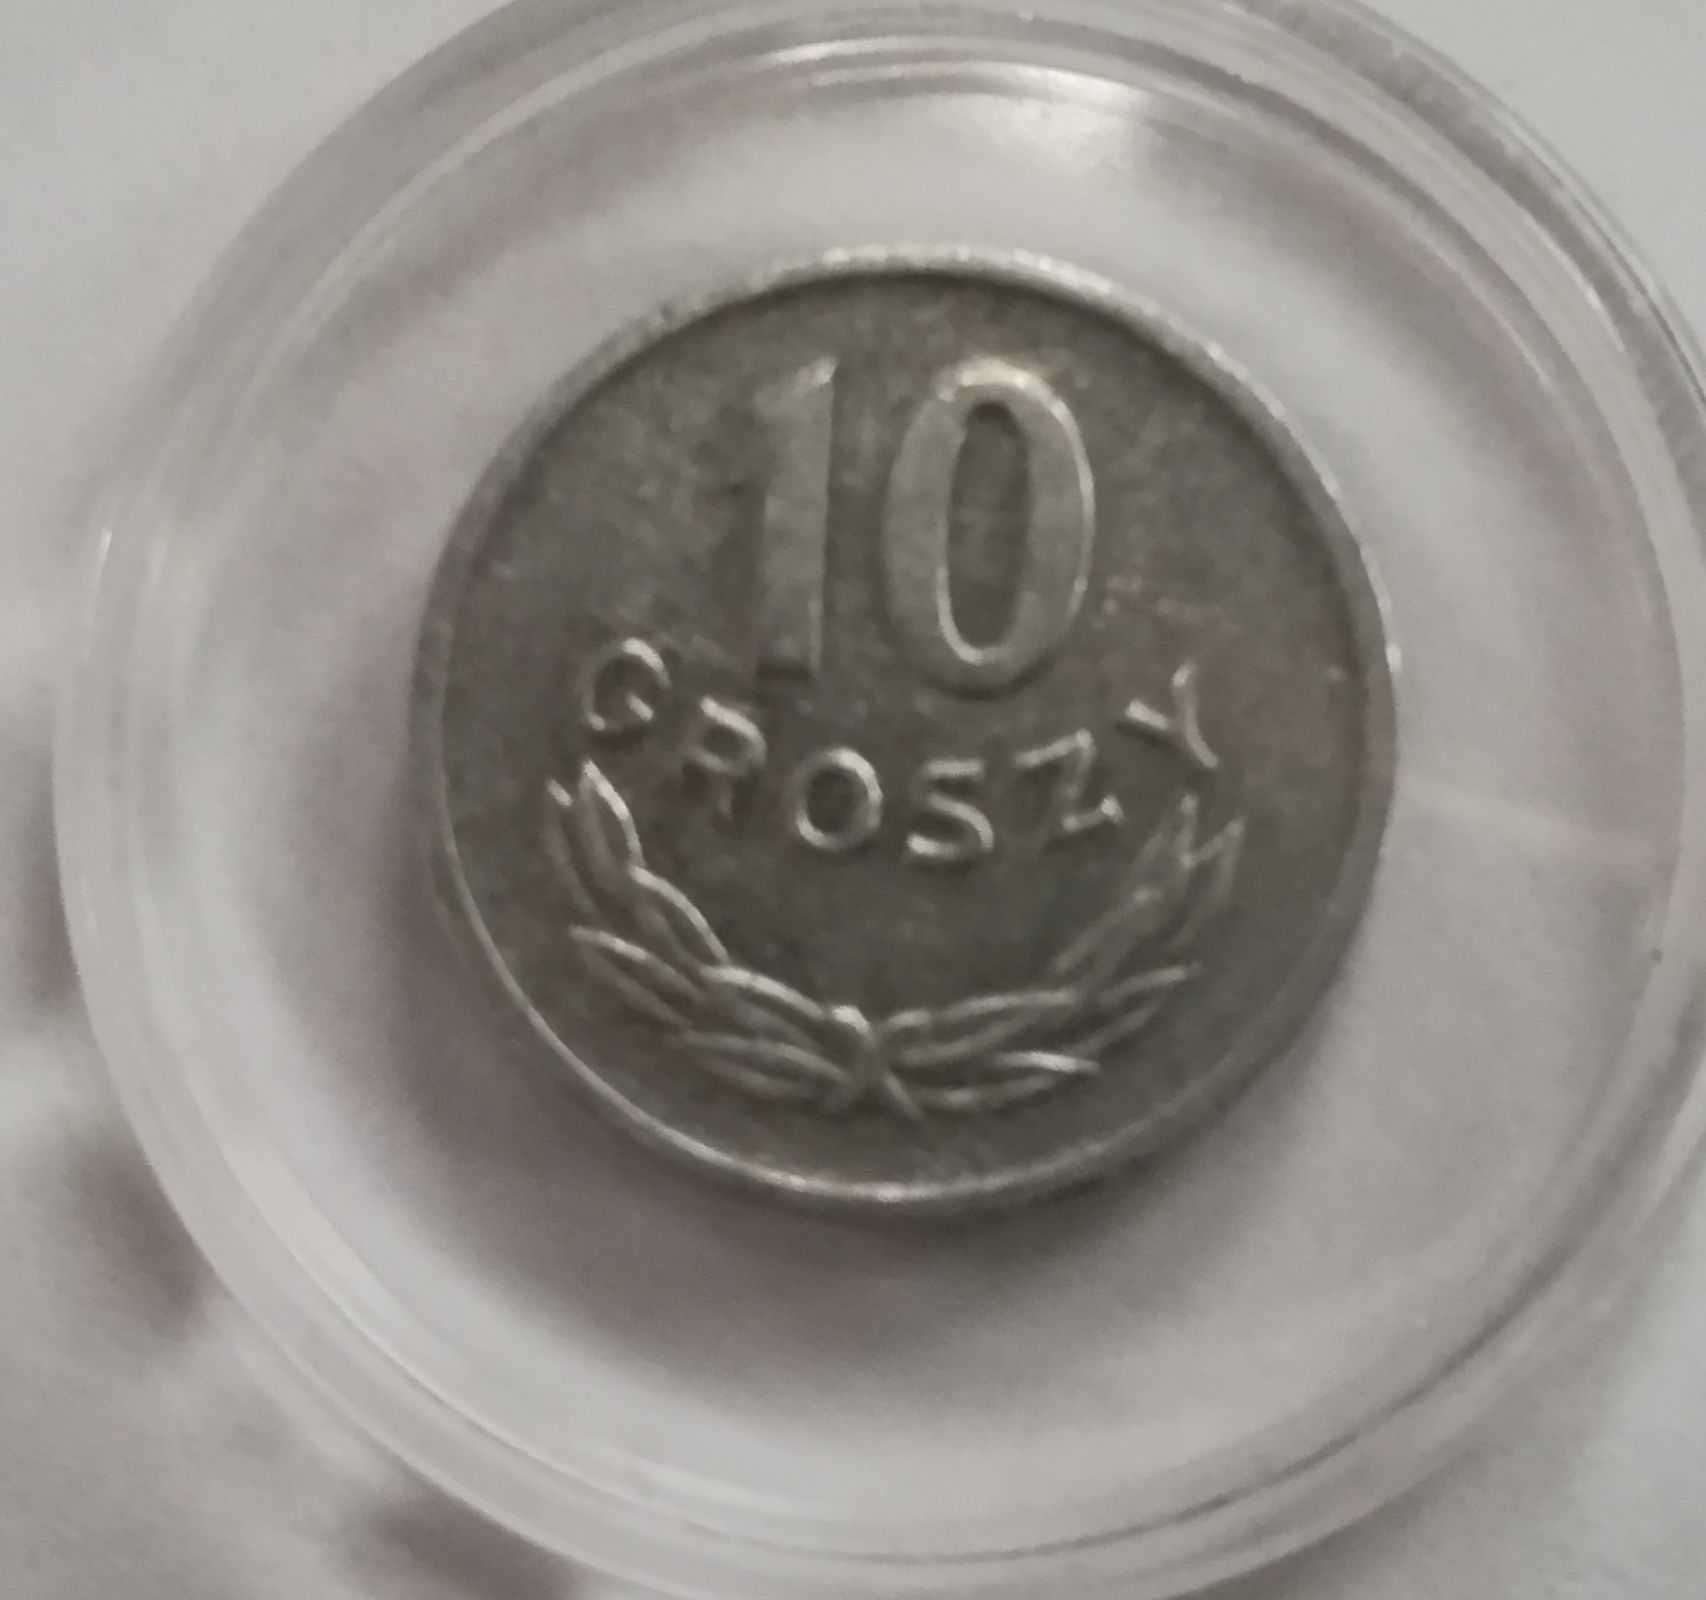 Moneta 10 gr z 1969 z zaznaczonym destruktem, stan b. dobry